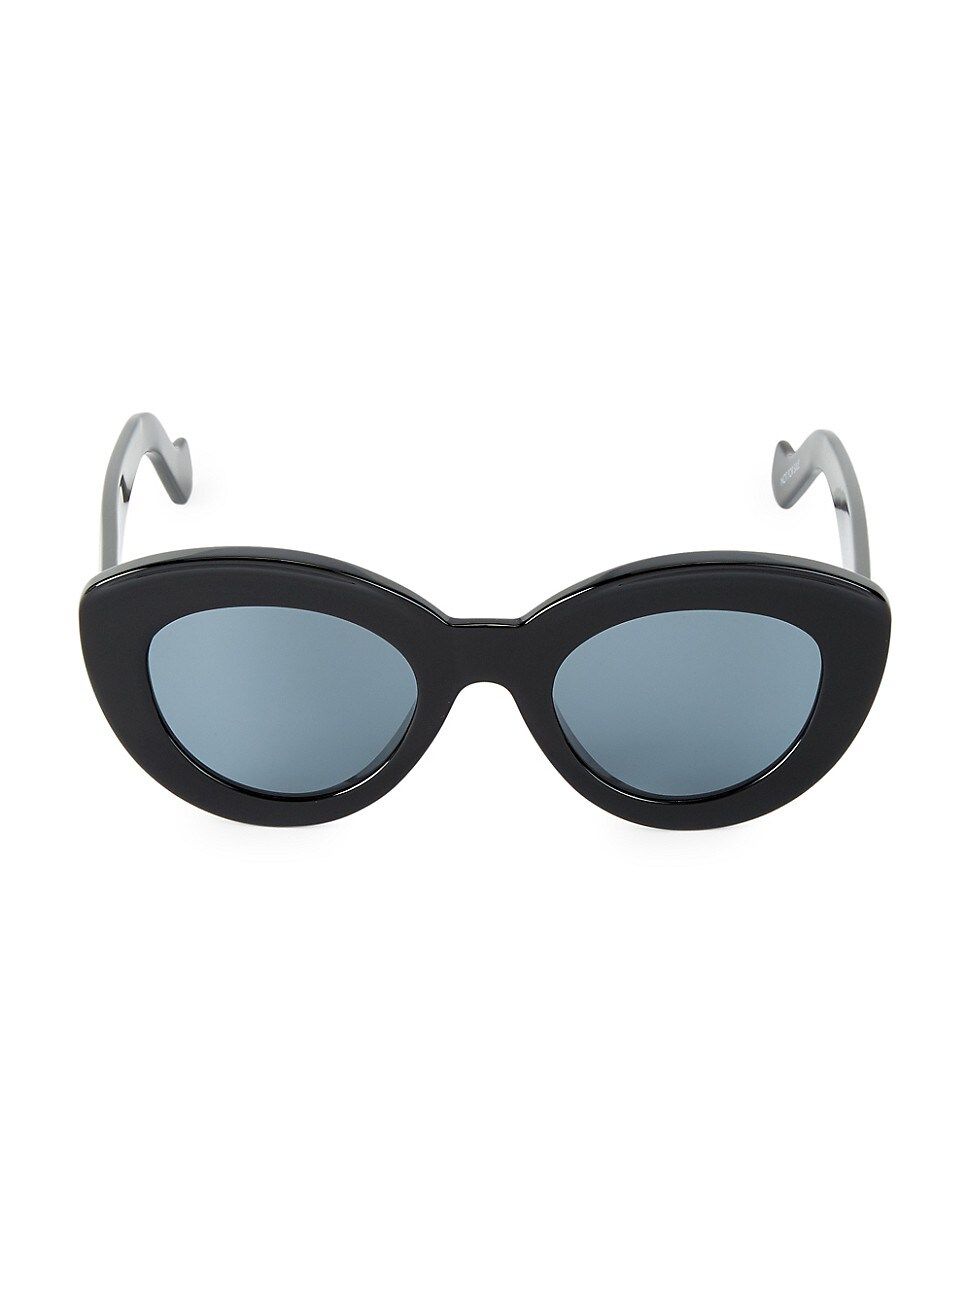 Loewe Women's 50MM Cateye Sunglasses - Black | Saks Fifth Avenue